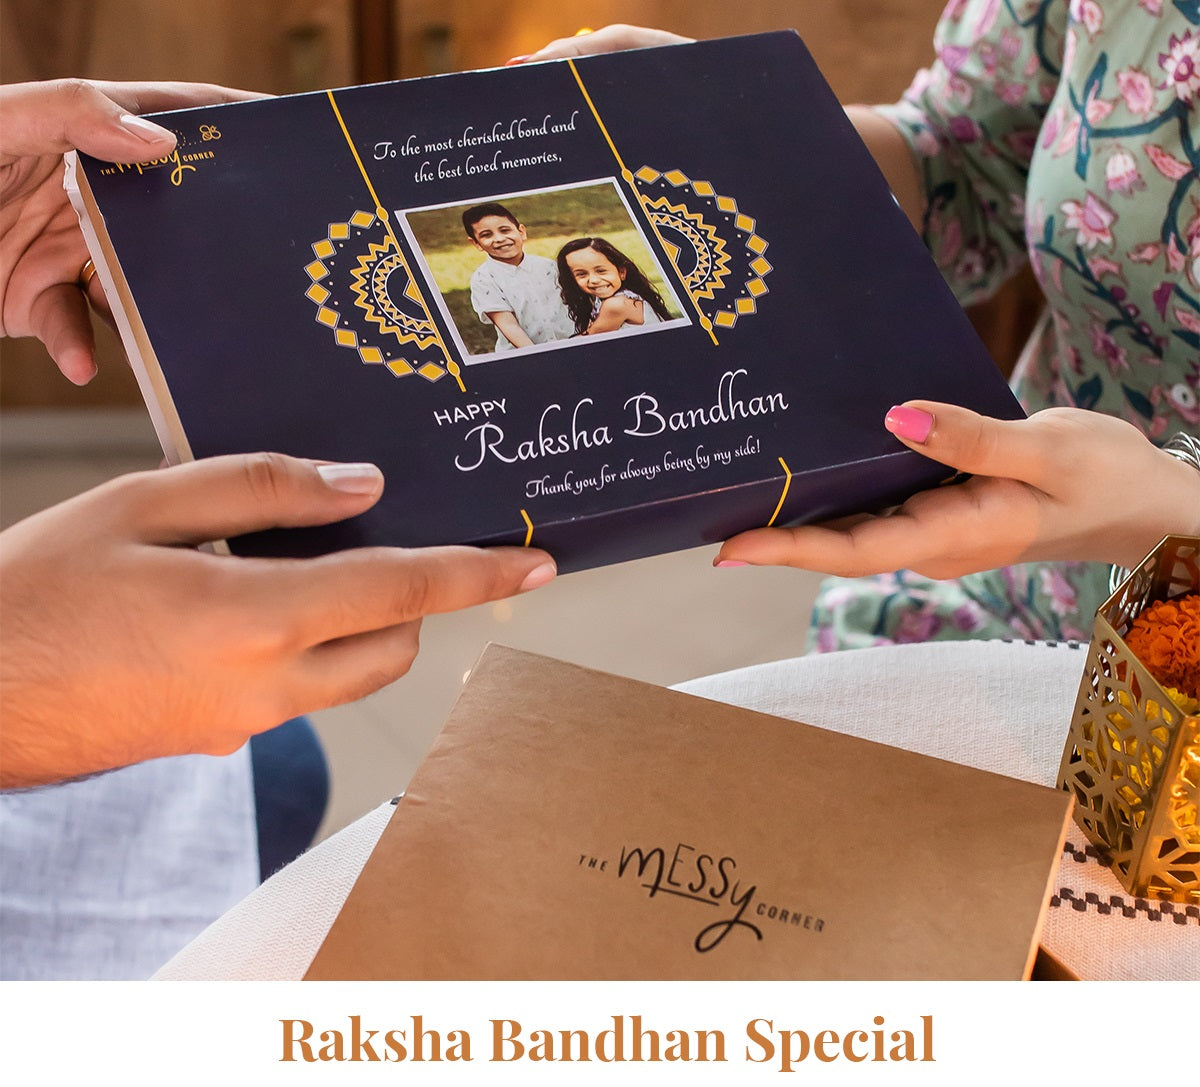 Grab the Best Rakhi Gifts